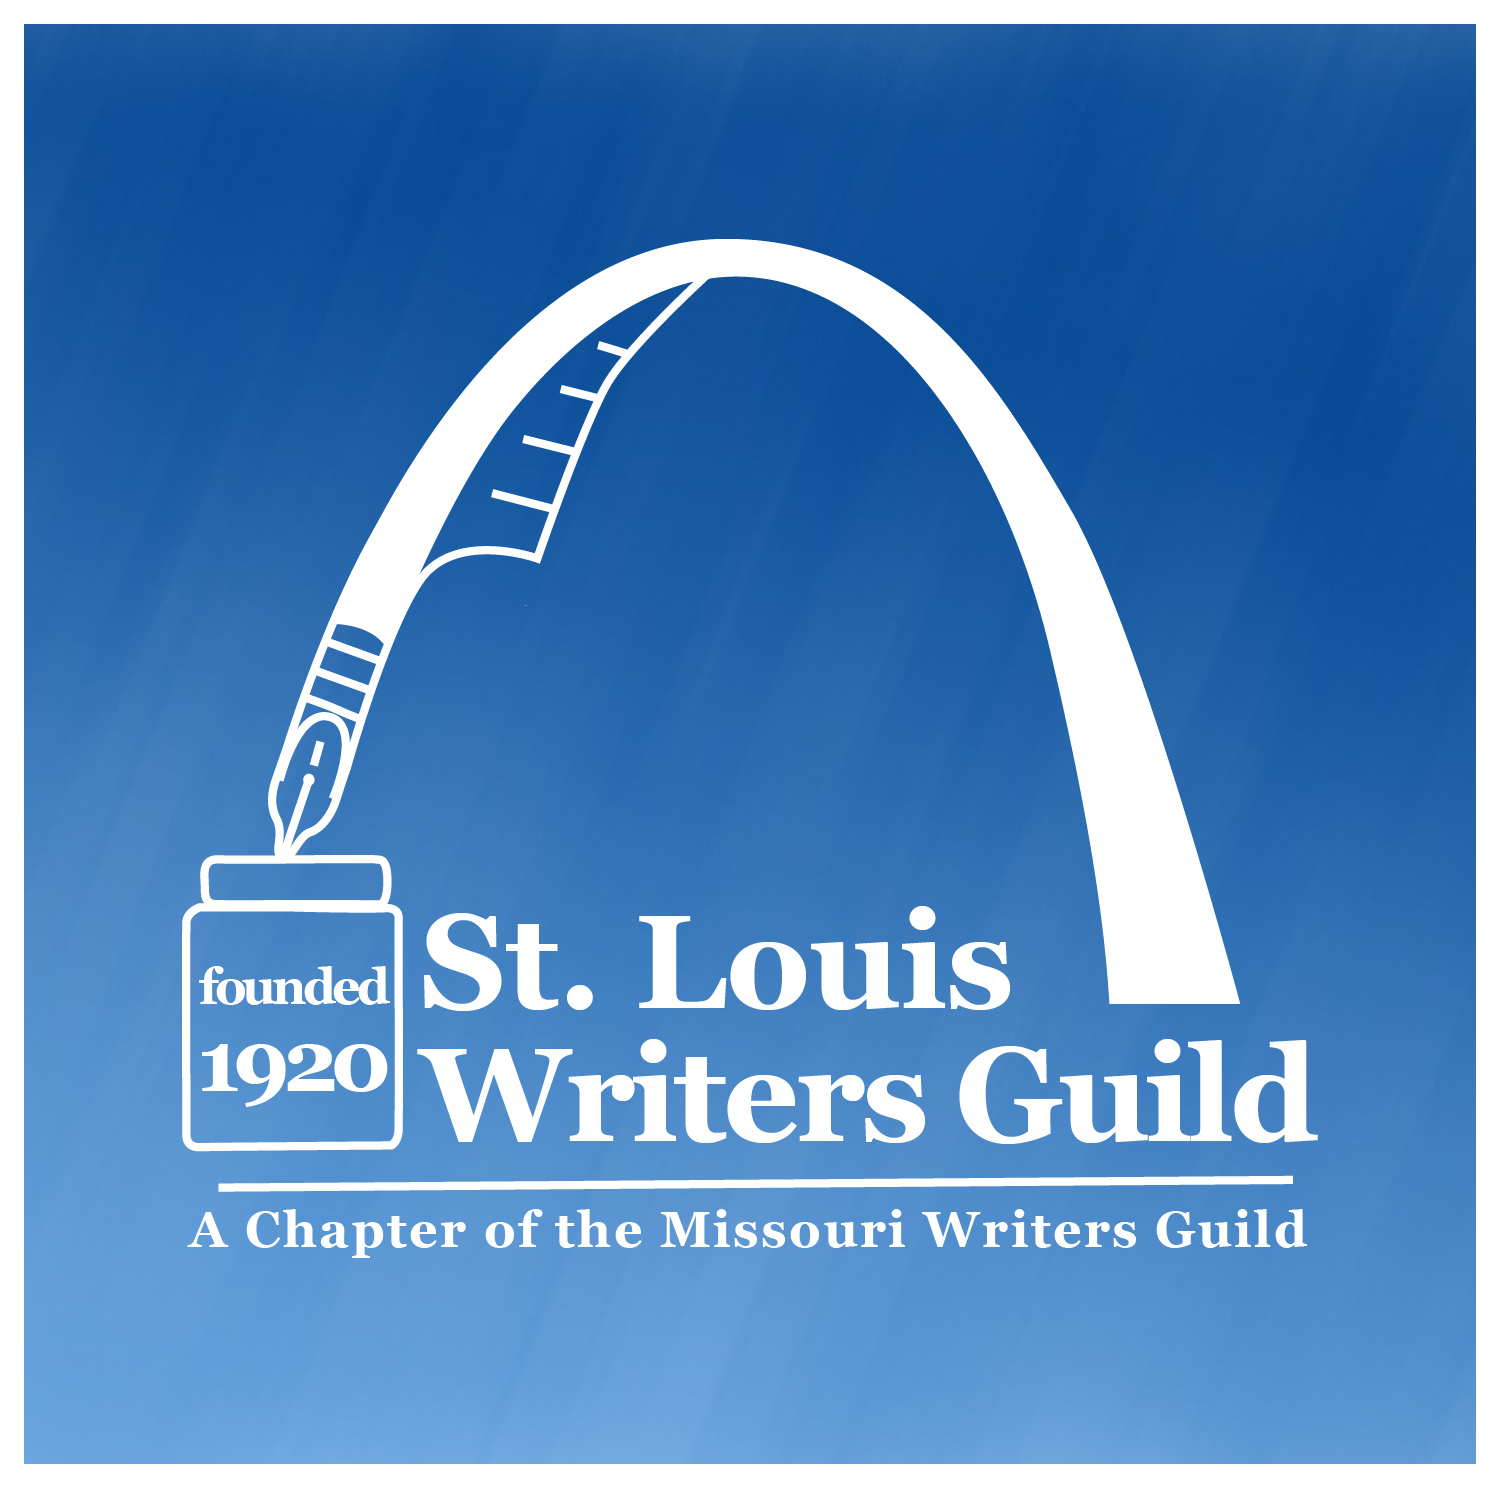 St. Louis Writers Guild